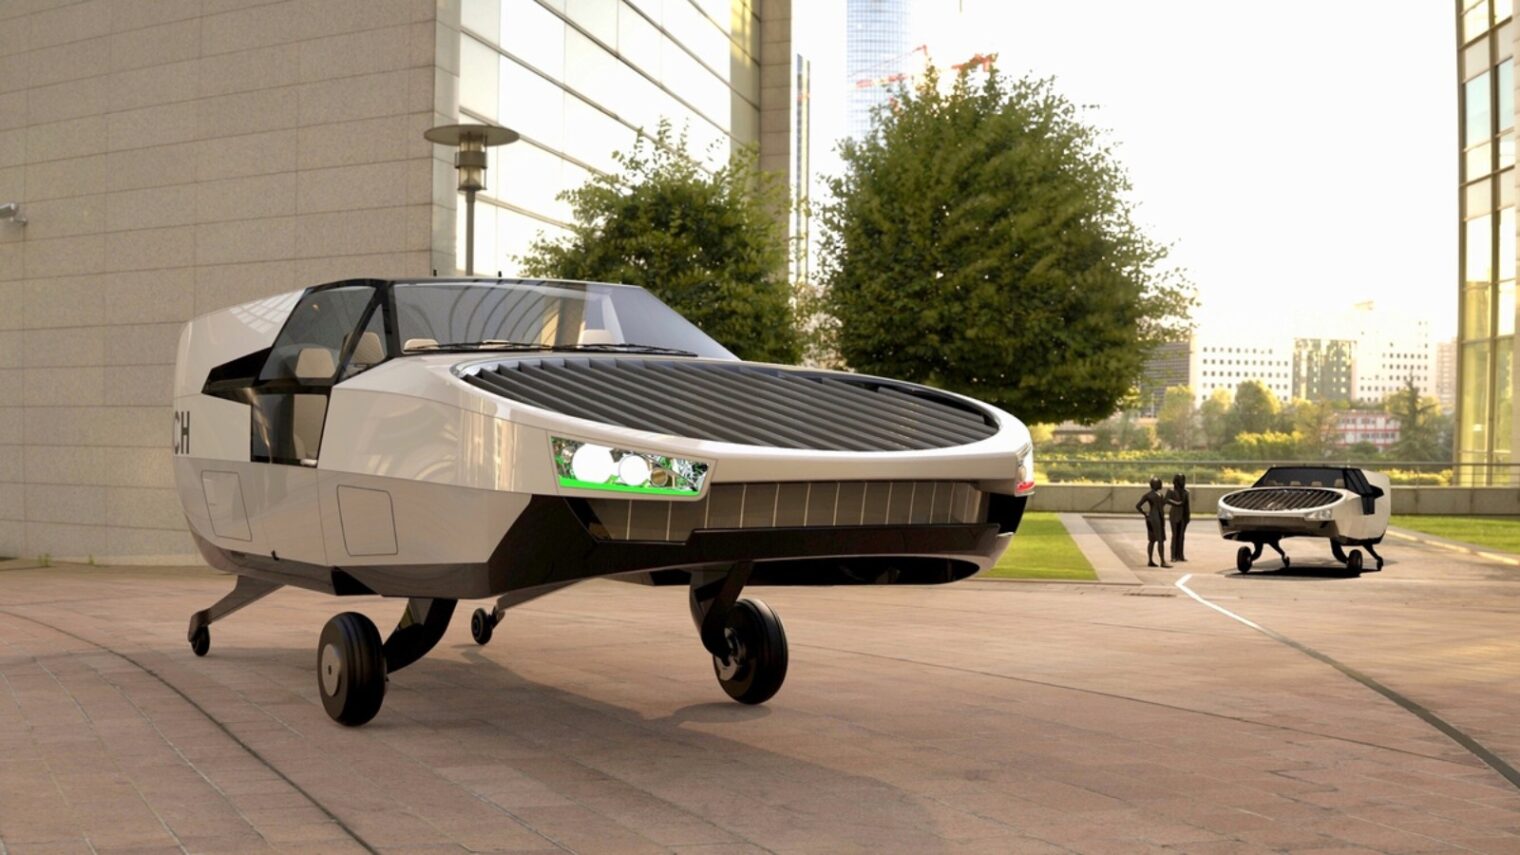 CityHawk, a proposed “flying car” by Urban Aeronautics. Photo courtesy of Urban Aeronautics